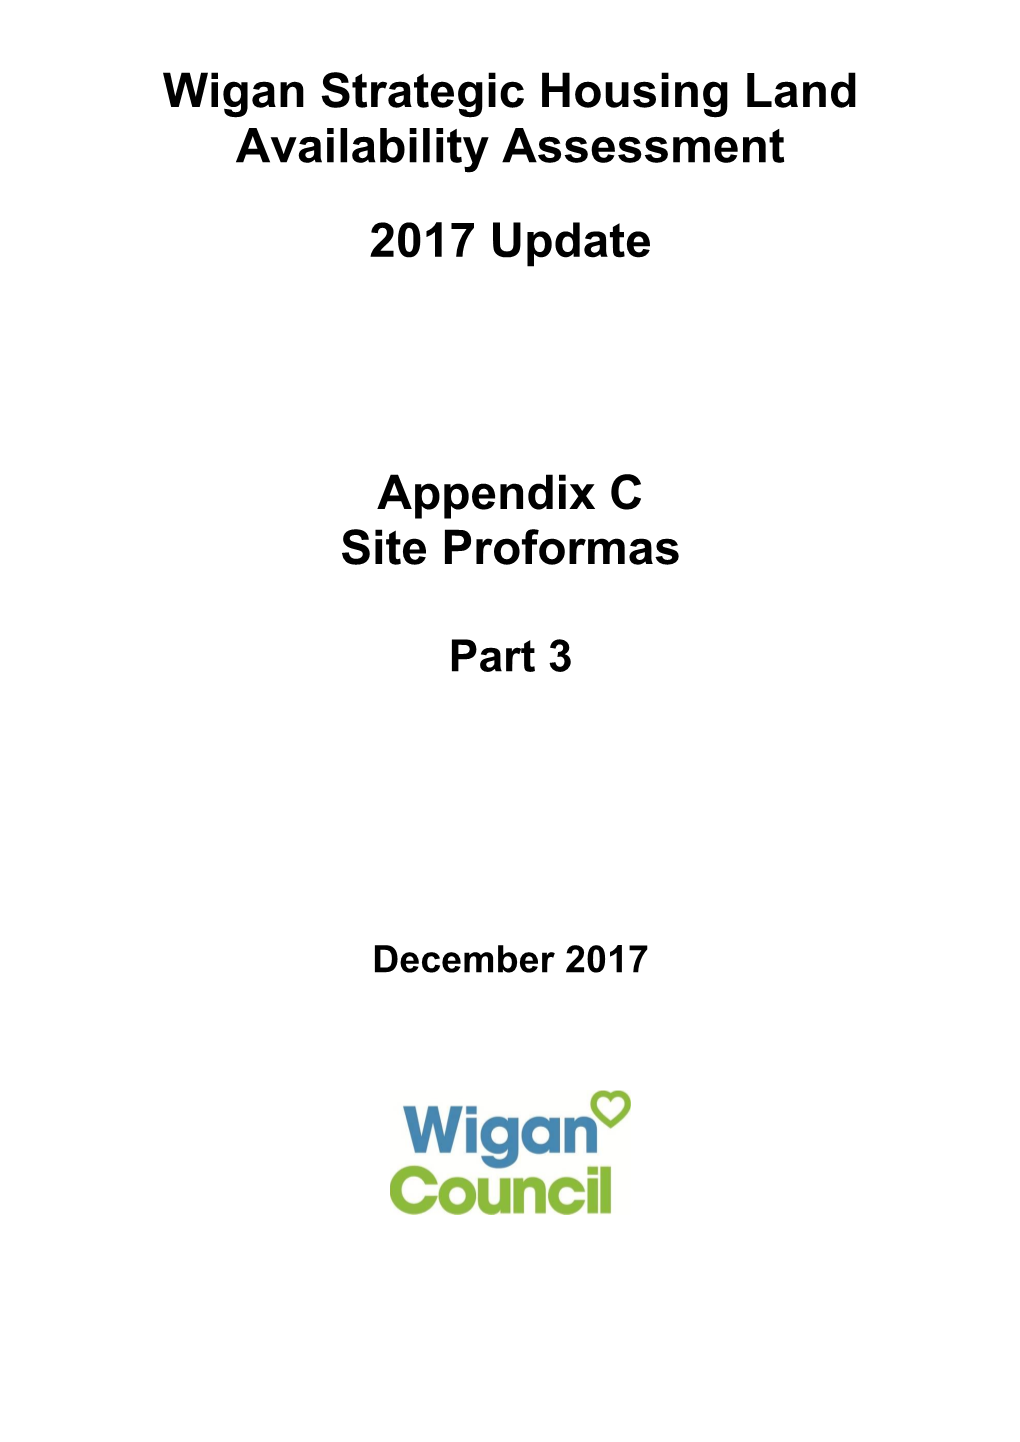 Wigan Strategic Housing Land Availability Assessment 2017 Update (December 2017)